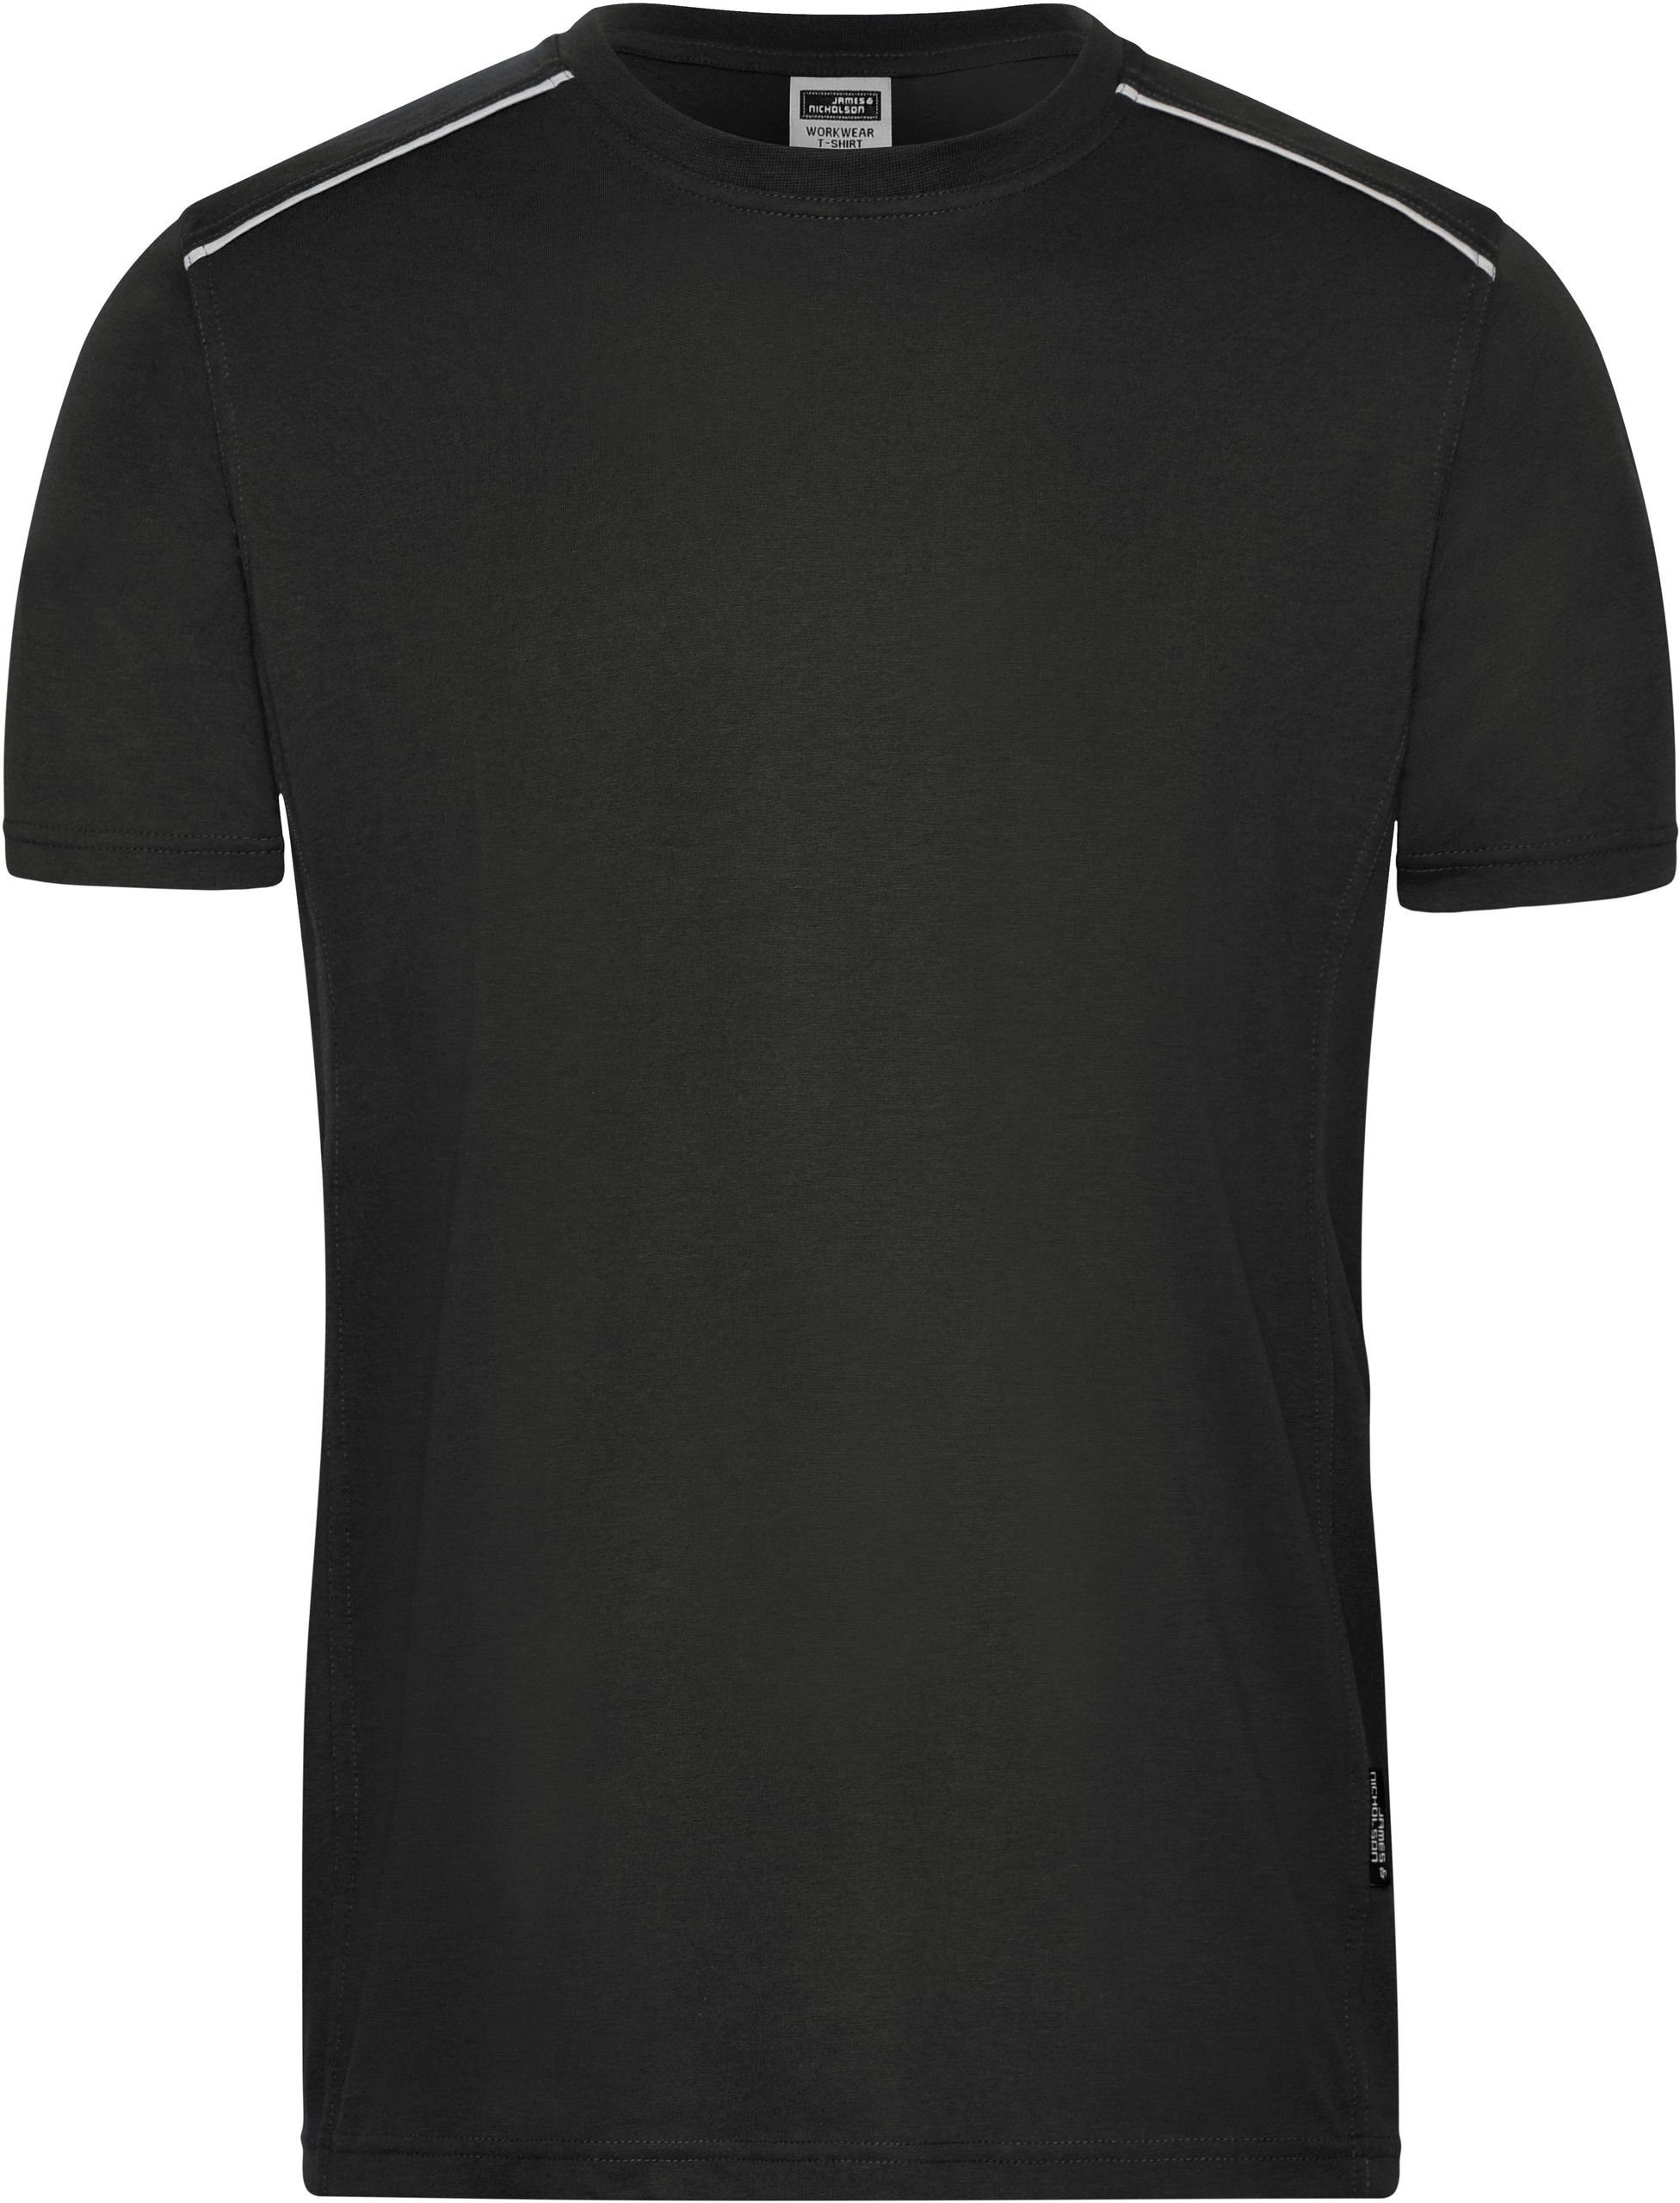 James & Workwear Baumwolle Black -Solid- Bio Nicholson T-Shirt Arbeits T-Shirt FaS50890